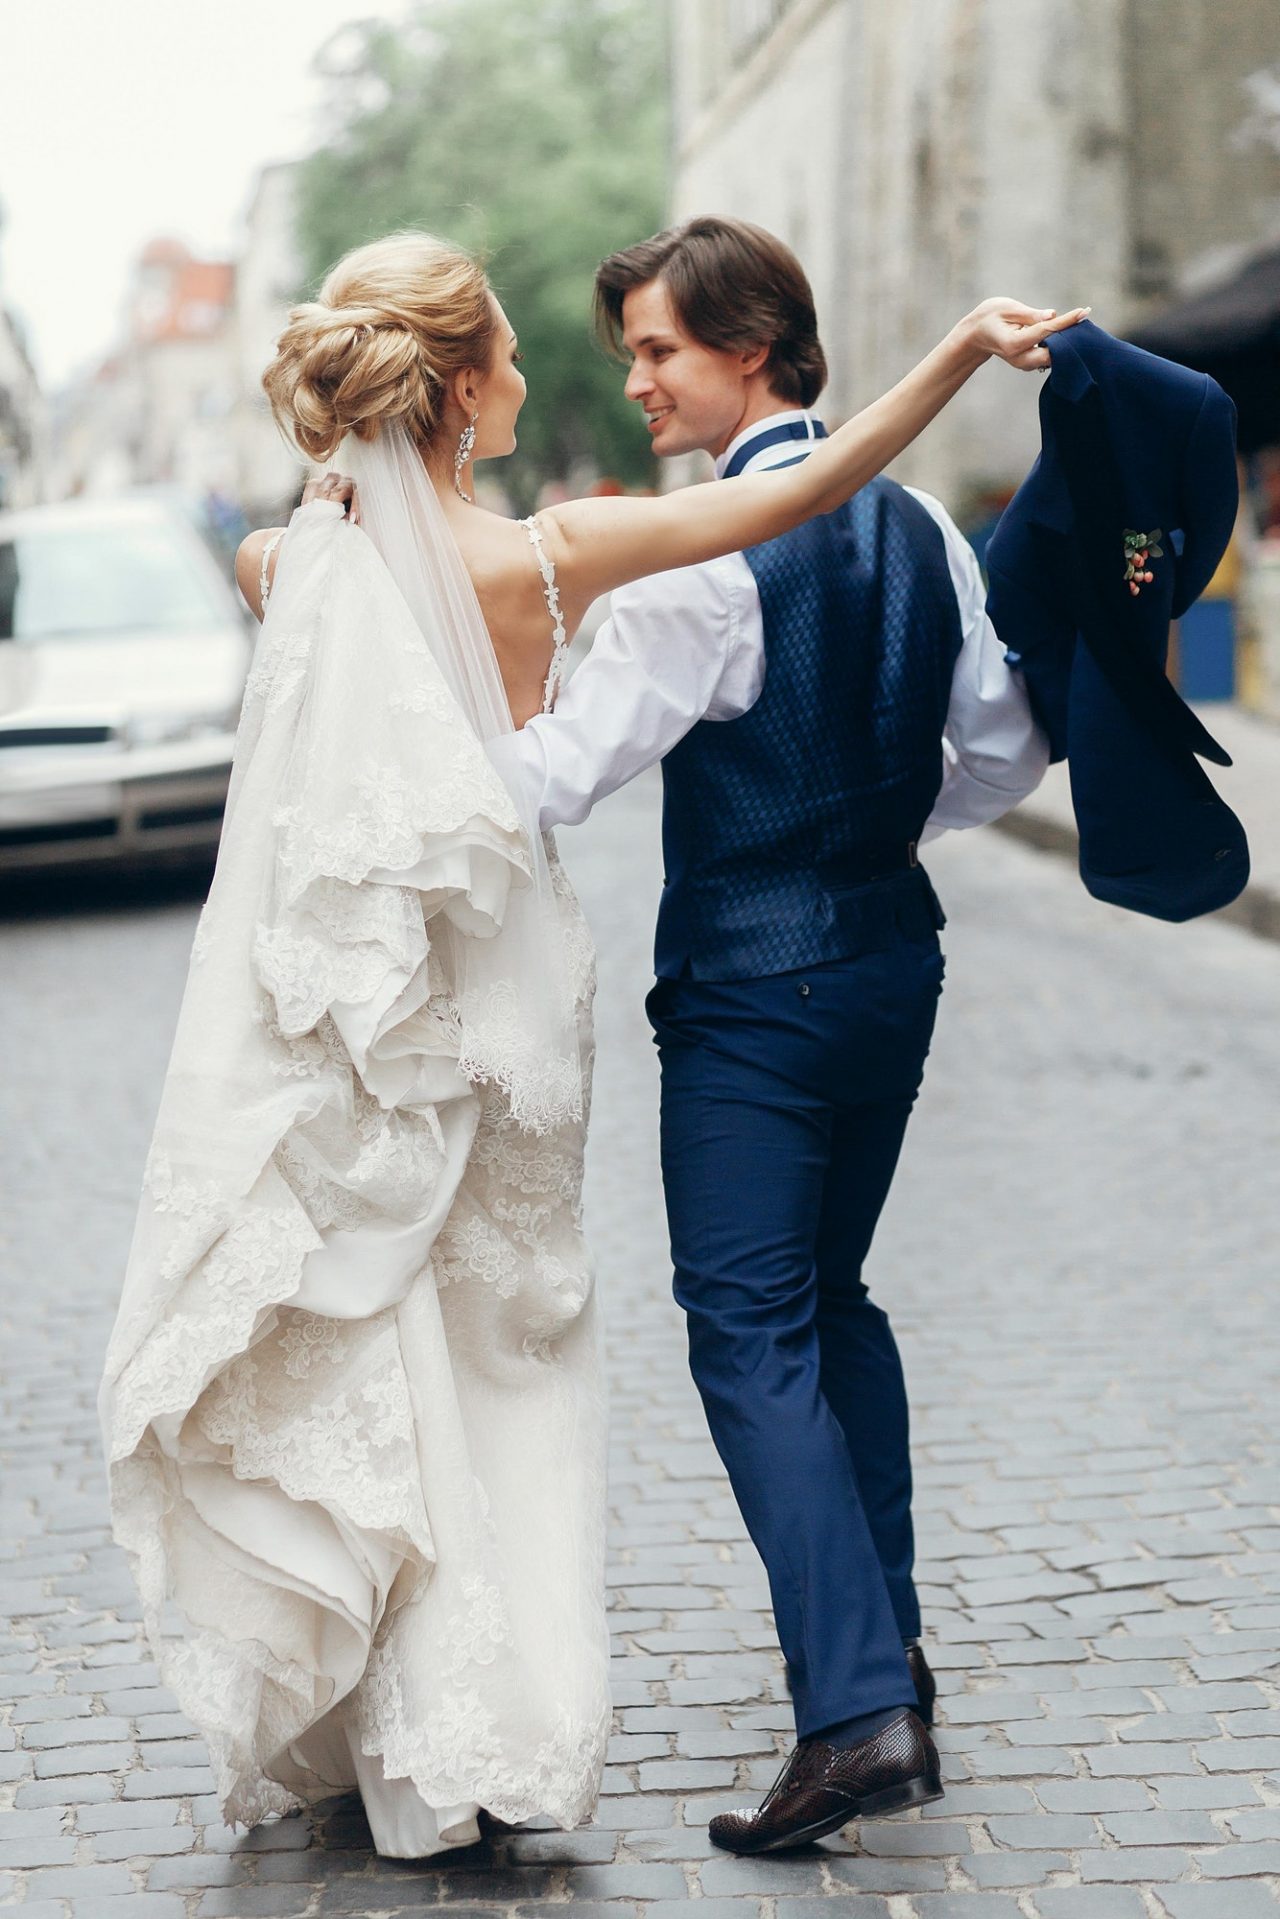 Bride and groom dancing and having fun in city street.